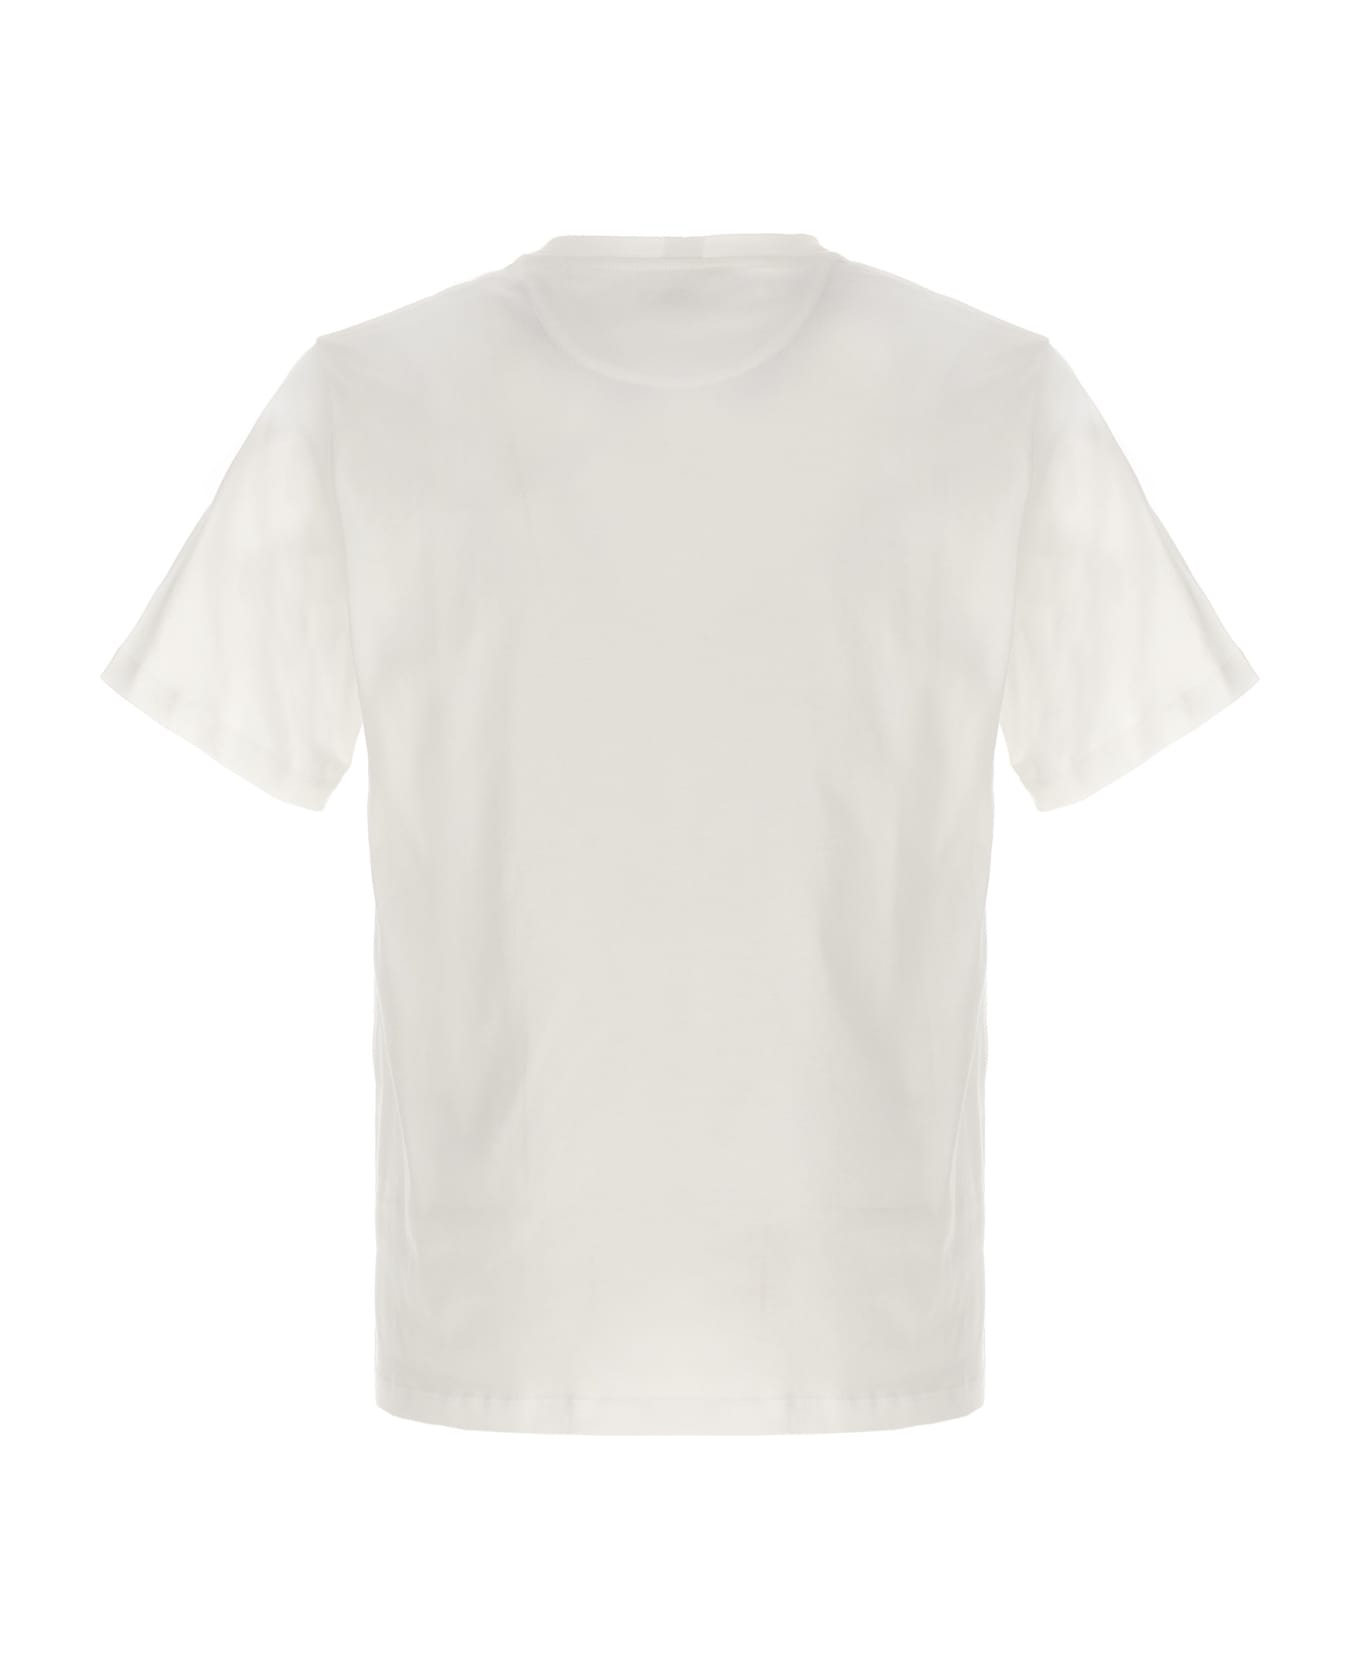 Bally Logo Embroidery T-shirt - White